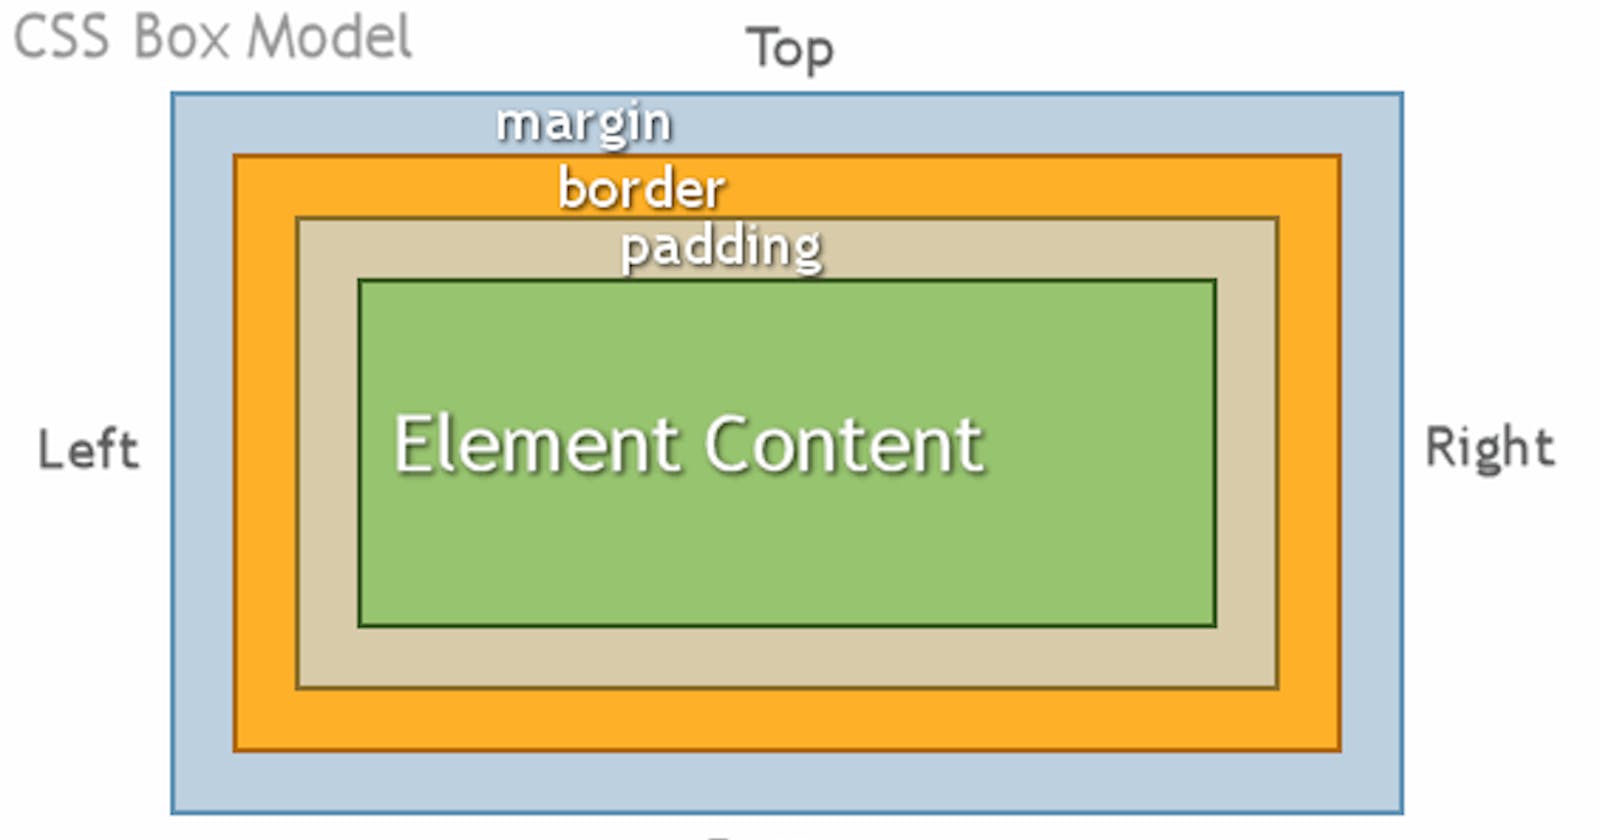 The CSS Box Model(Beginners).